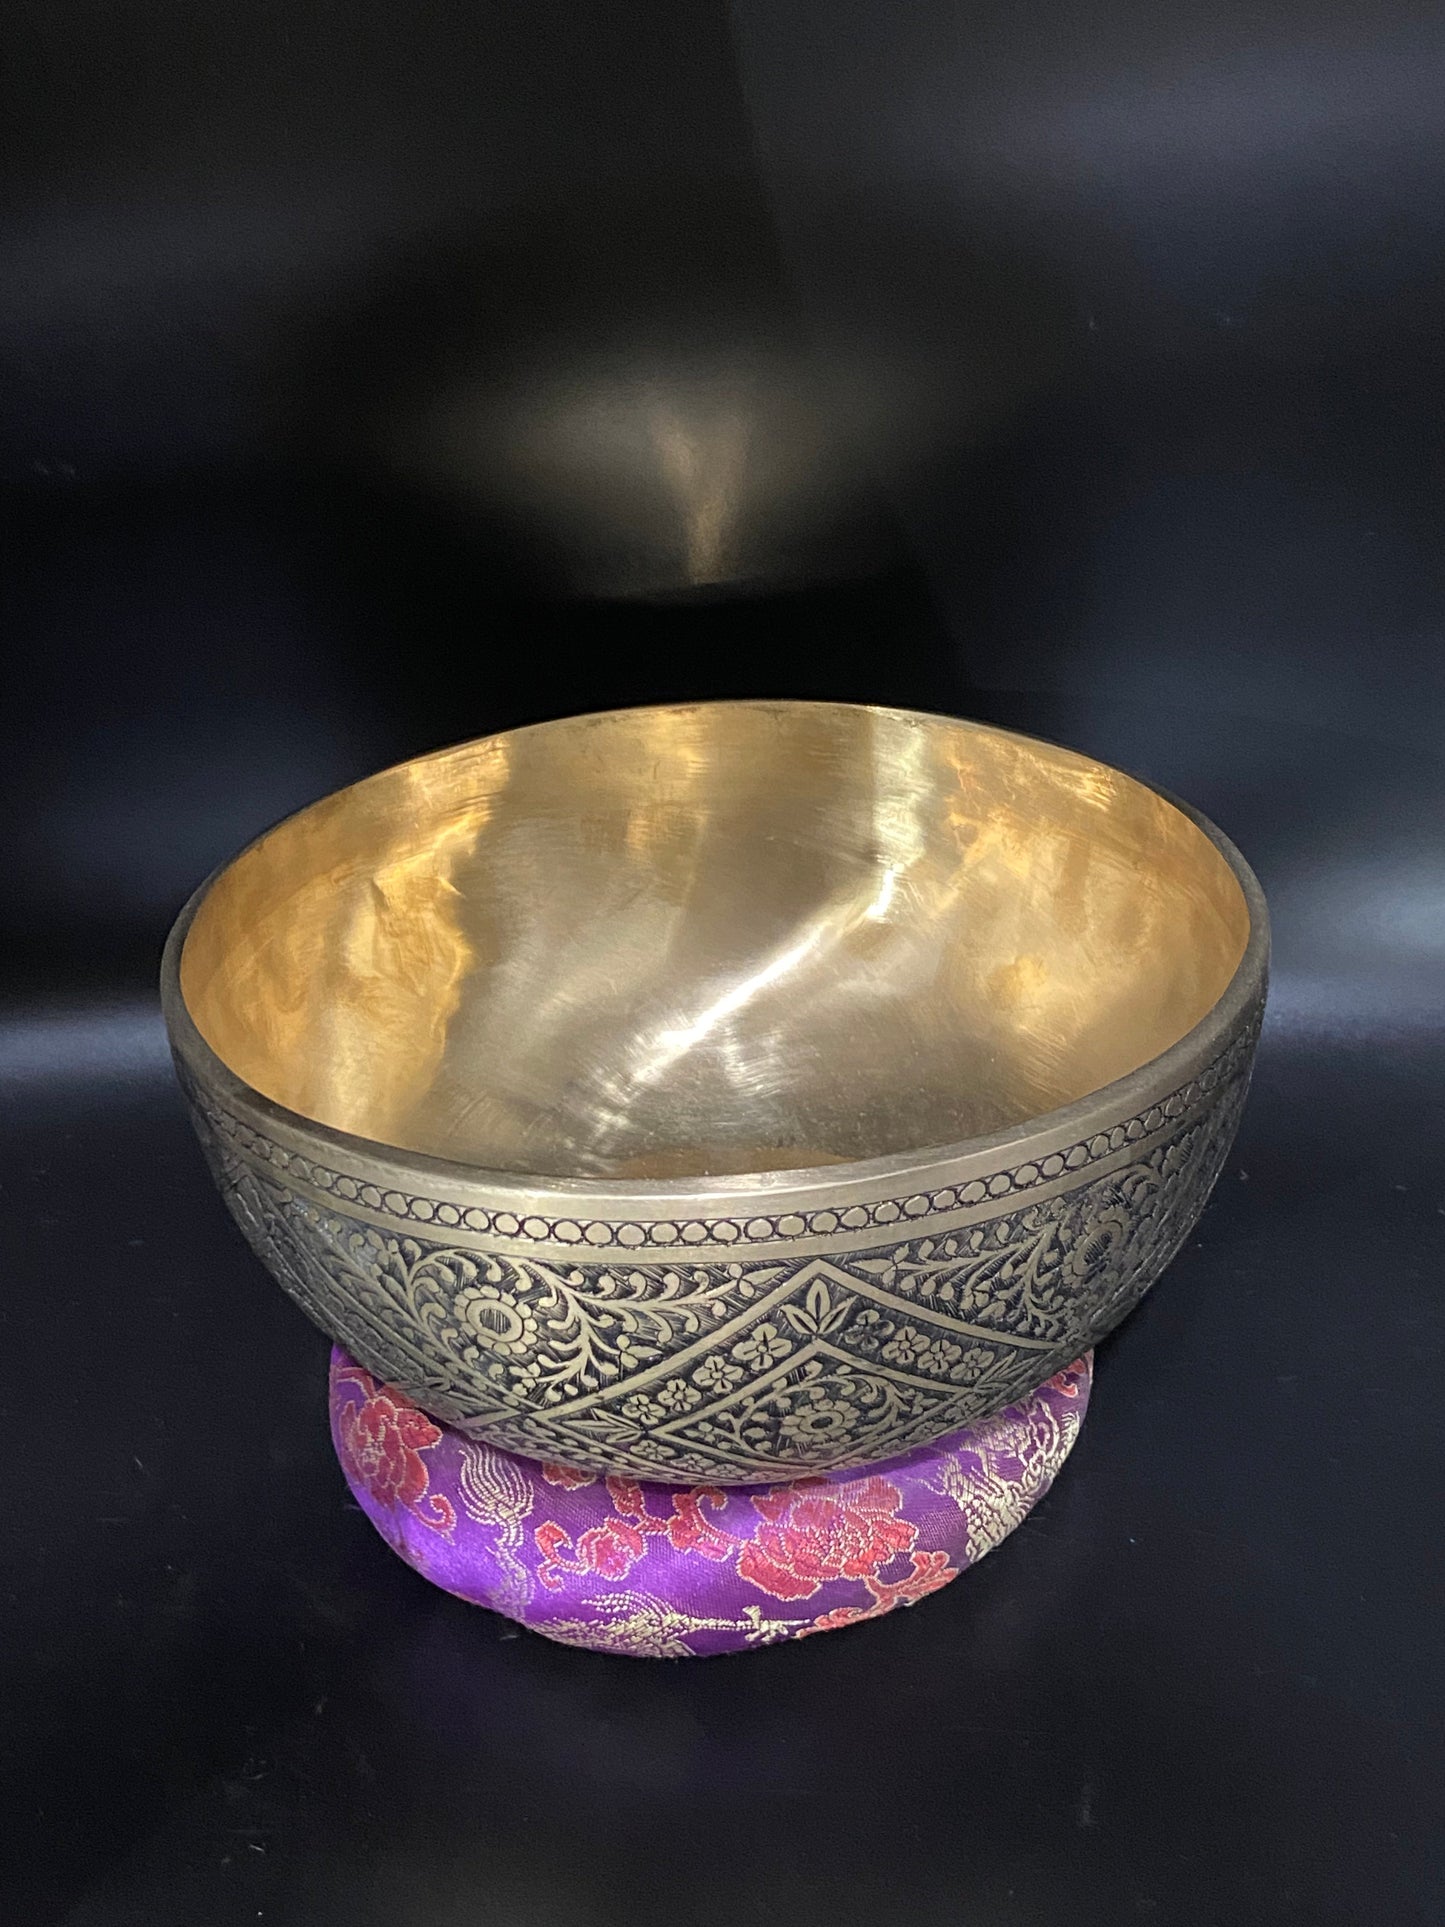 1.4KG Special Handbeaten Singing Bowl Made in Nepal, Tibetan Bowl Set for Chakra healing and balancing, relaxation, meditation purpose